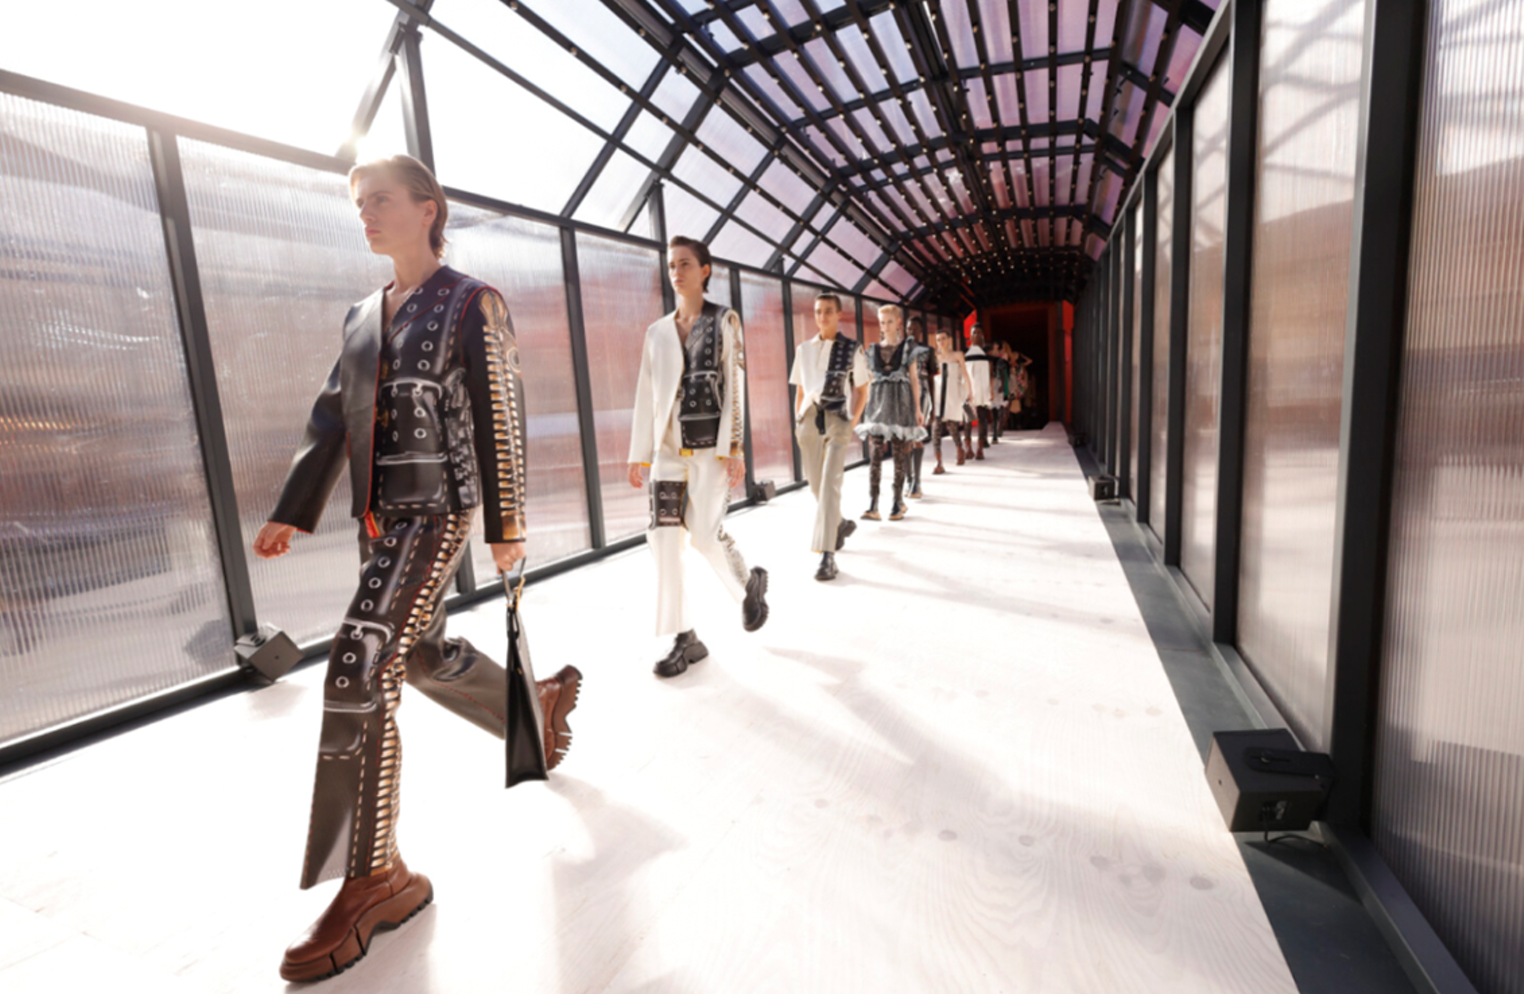 LV Store' fashion art -Explore our Modern Pop Art Collection!